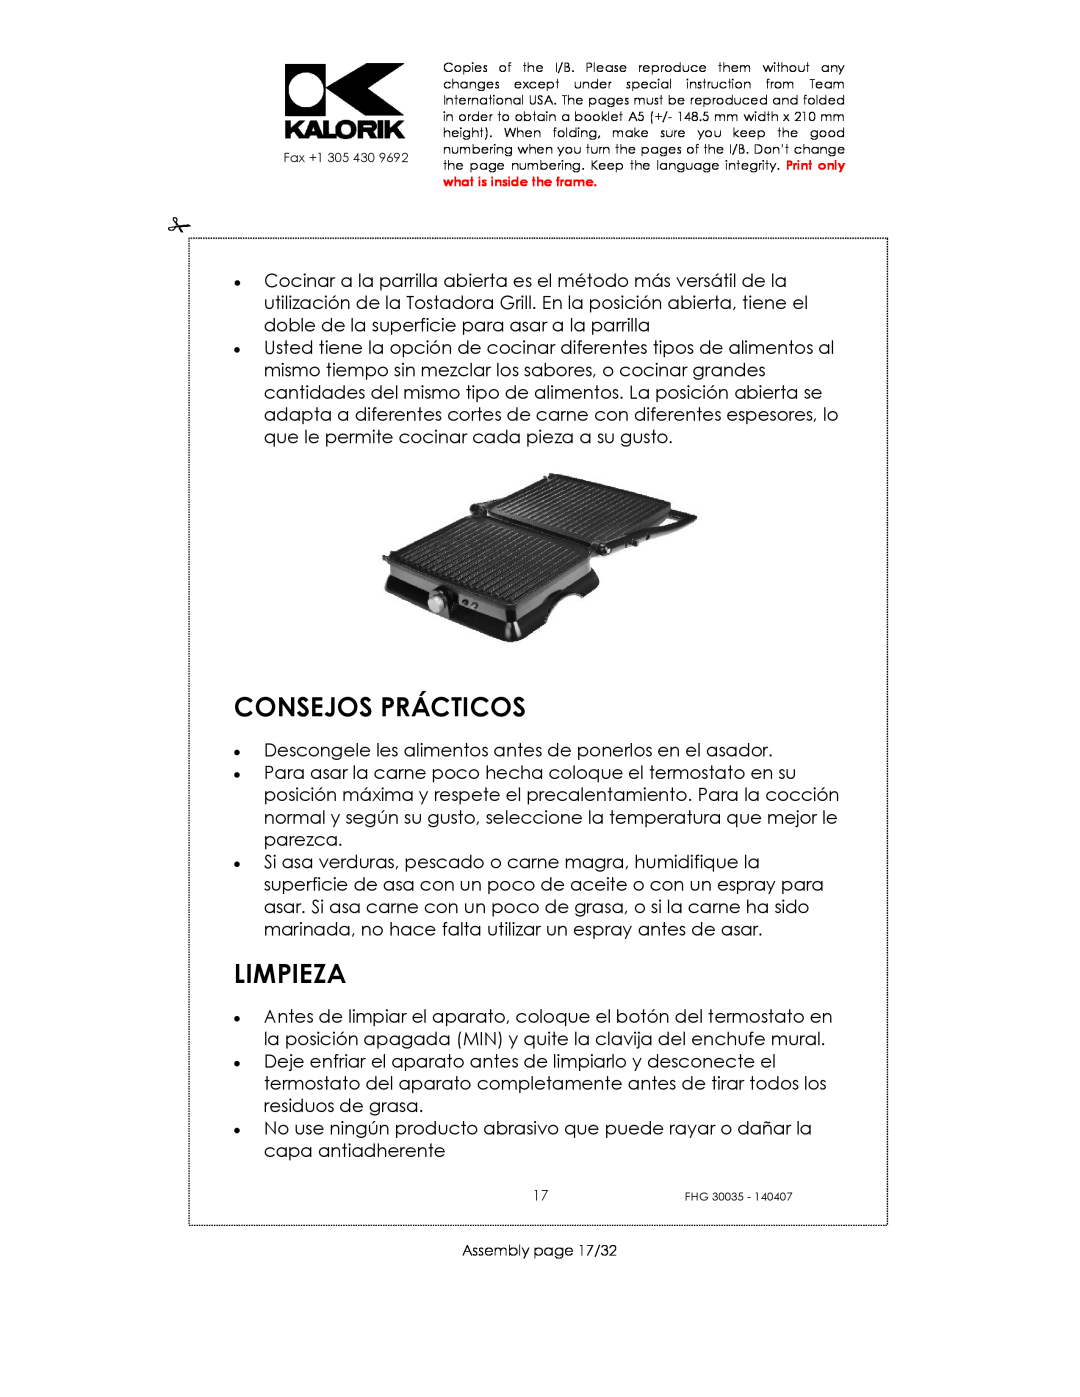 Kalorik FHG 30035 manual Consejos Prácticos, Limpieza, Assembly page 17/32 